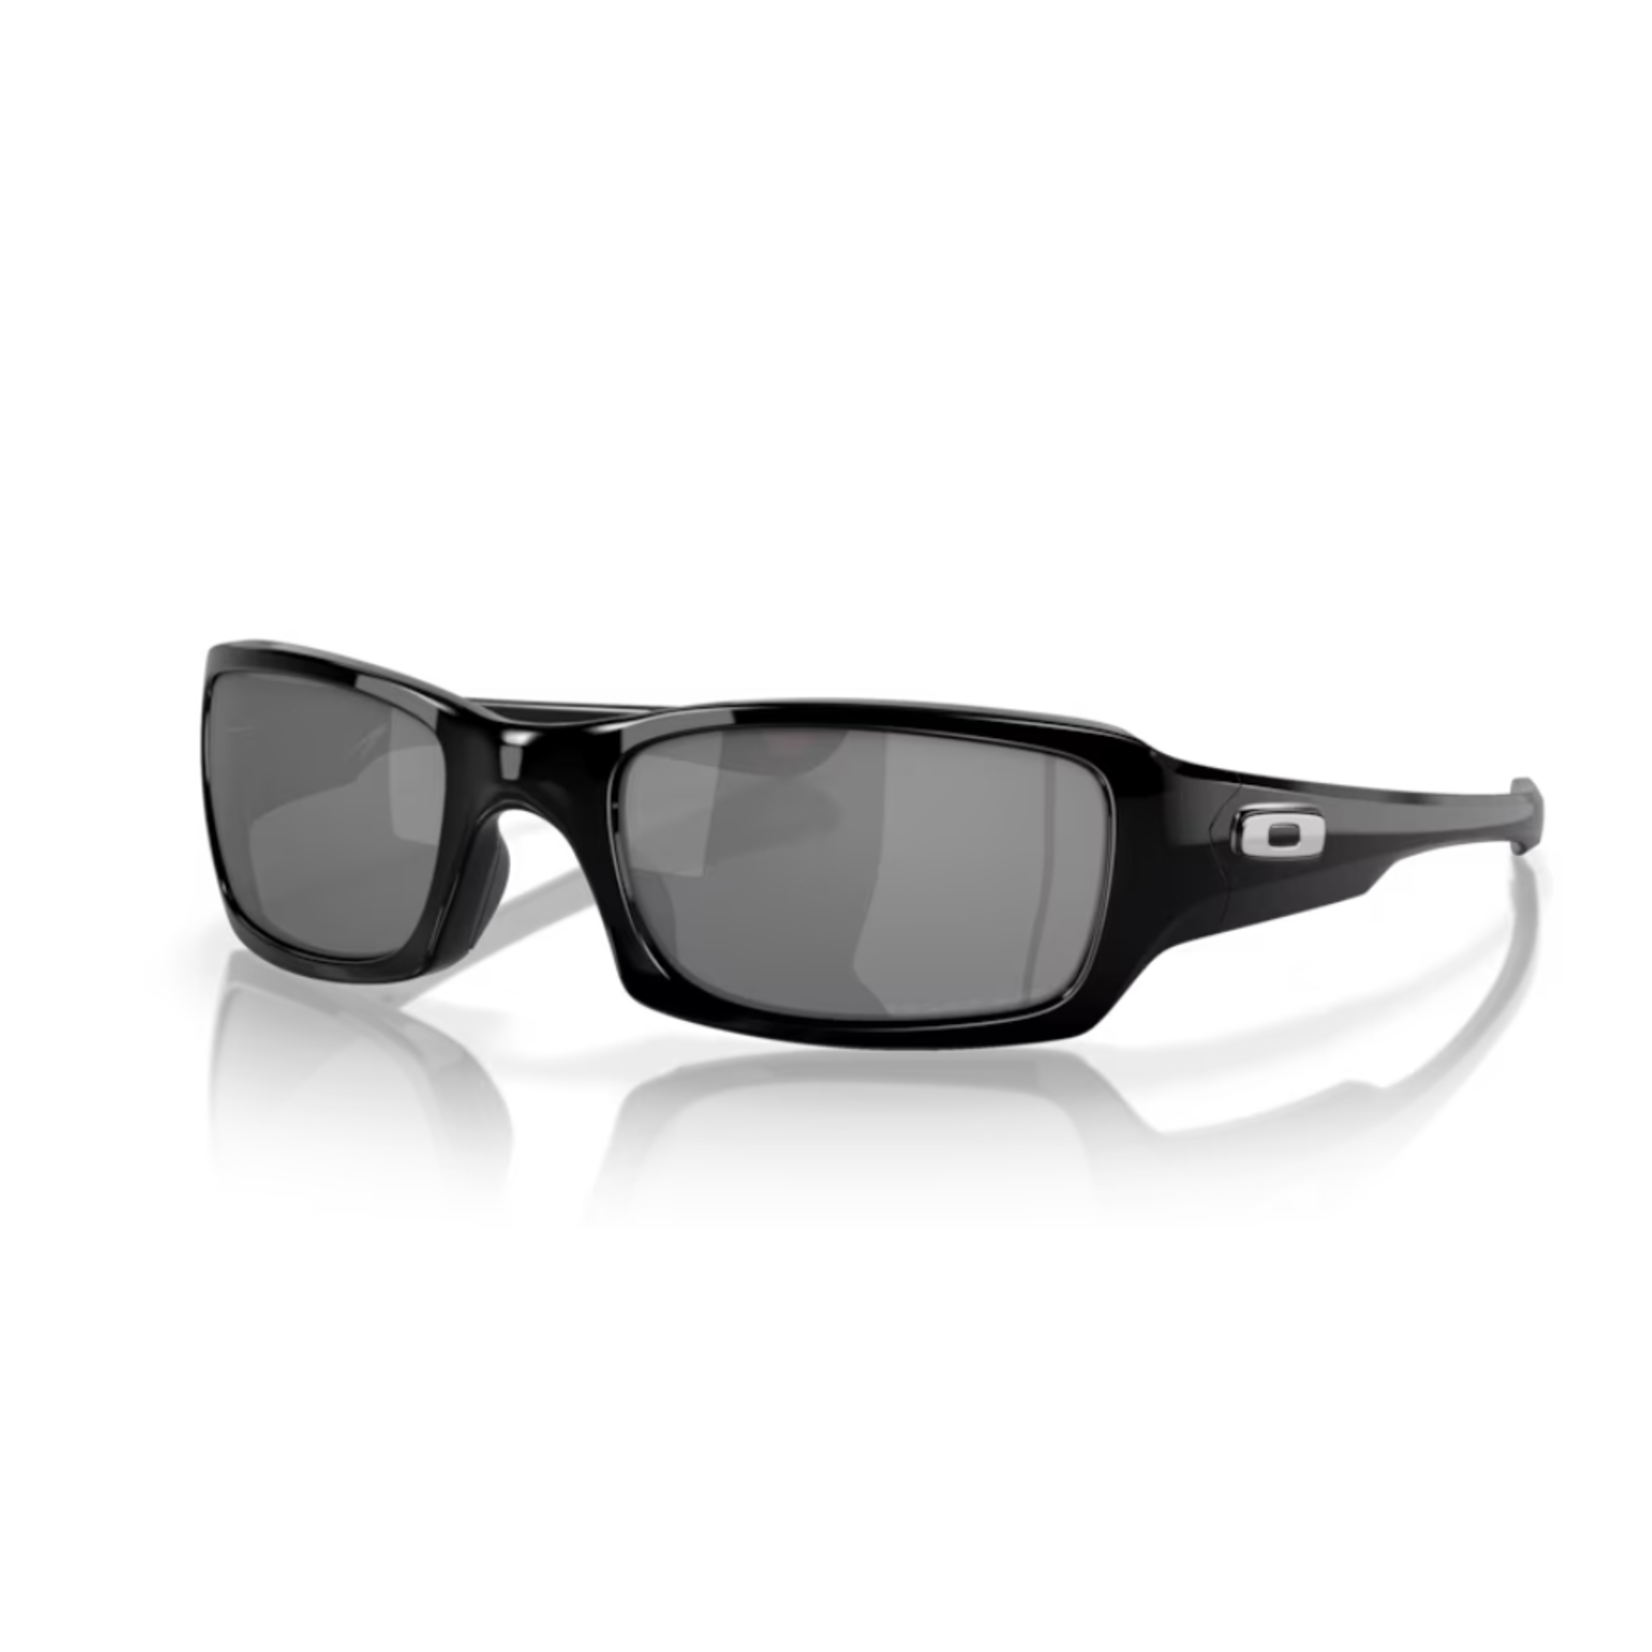 Oakley Oakley Sunglasses, Fives Squared, Polished Blk, Blk Iridium Polarized